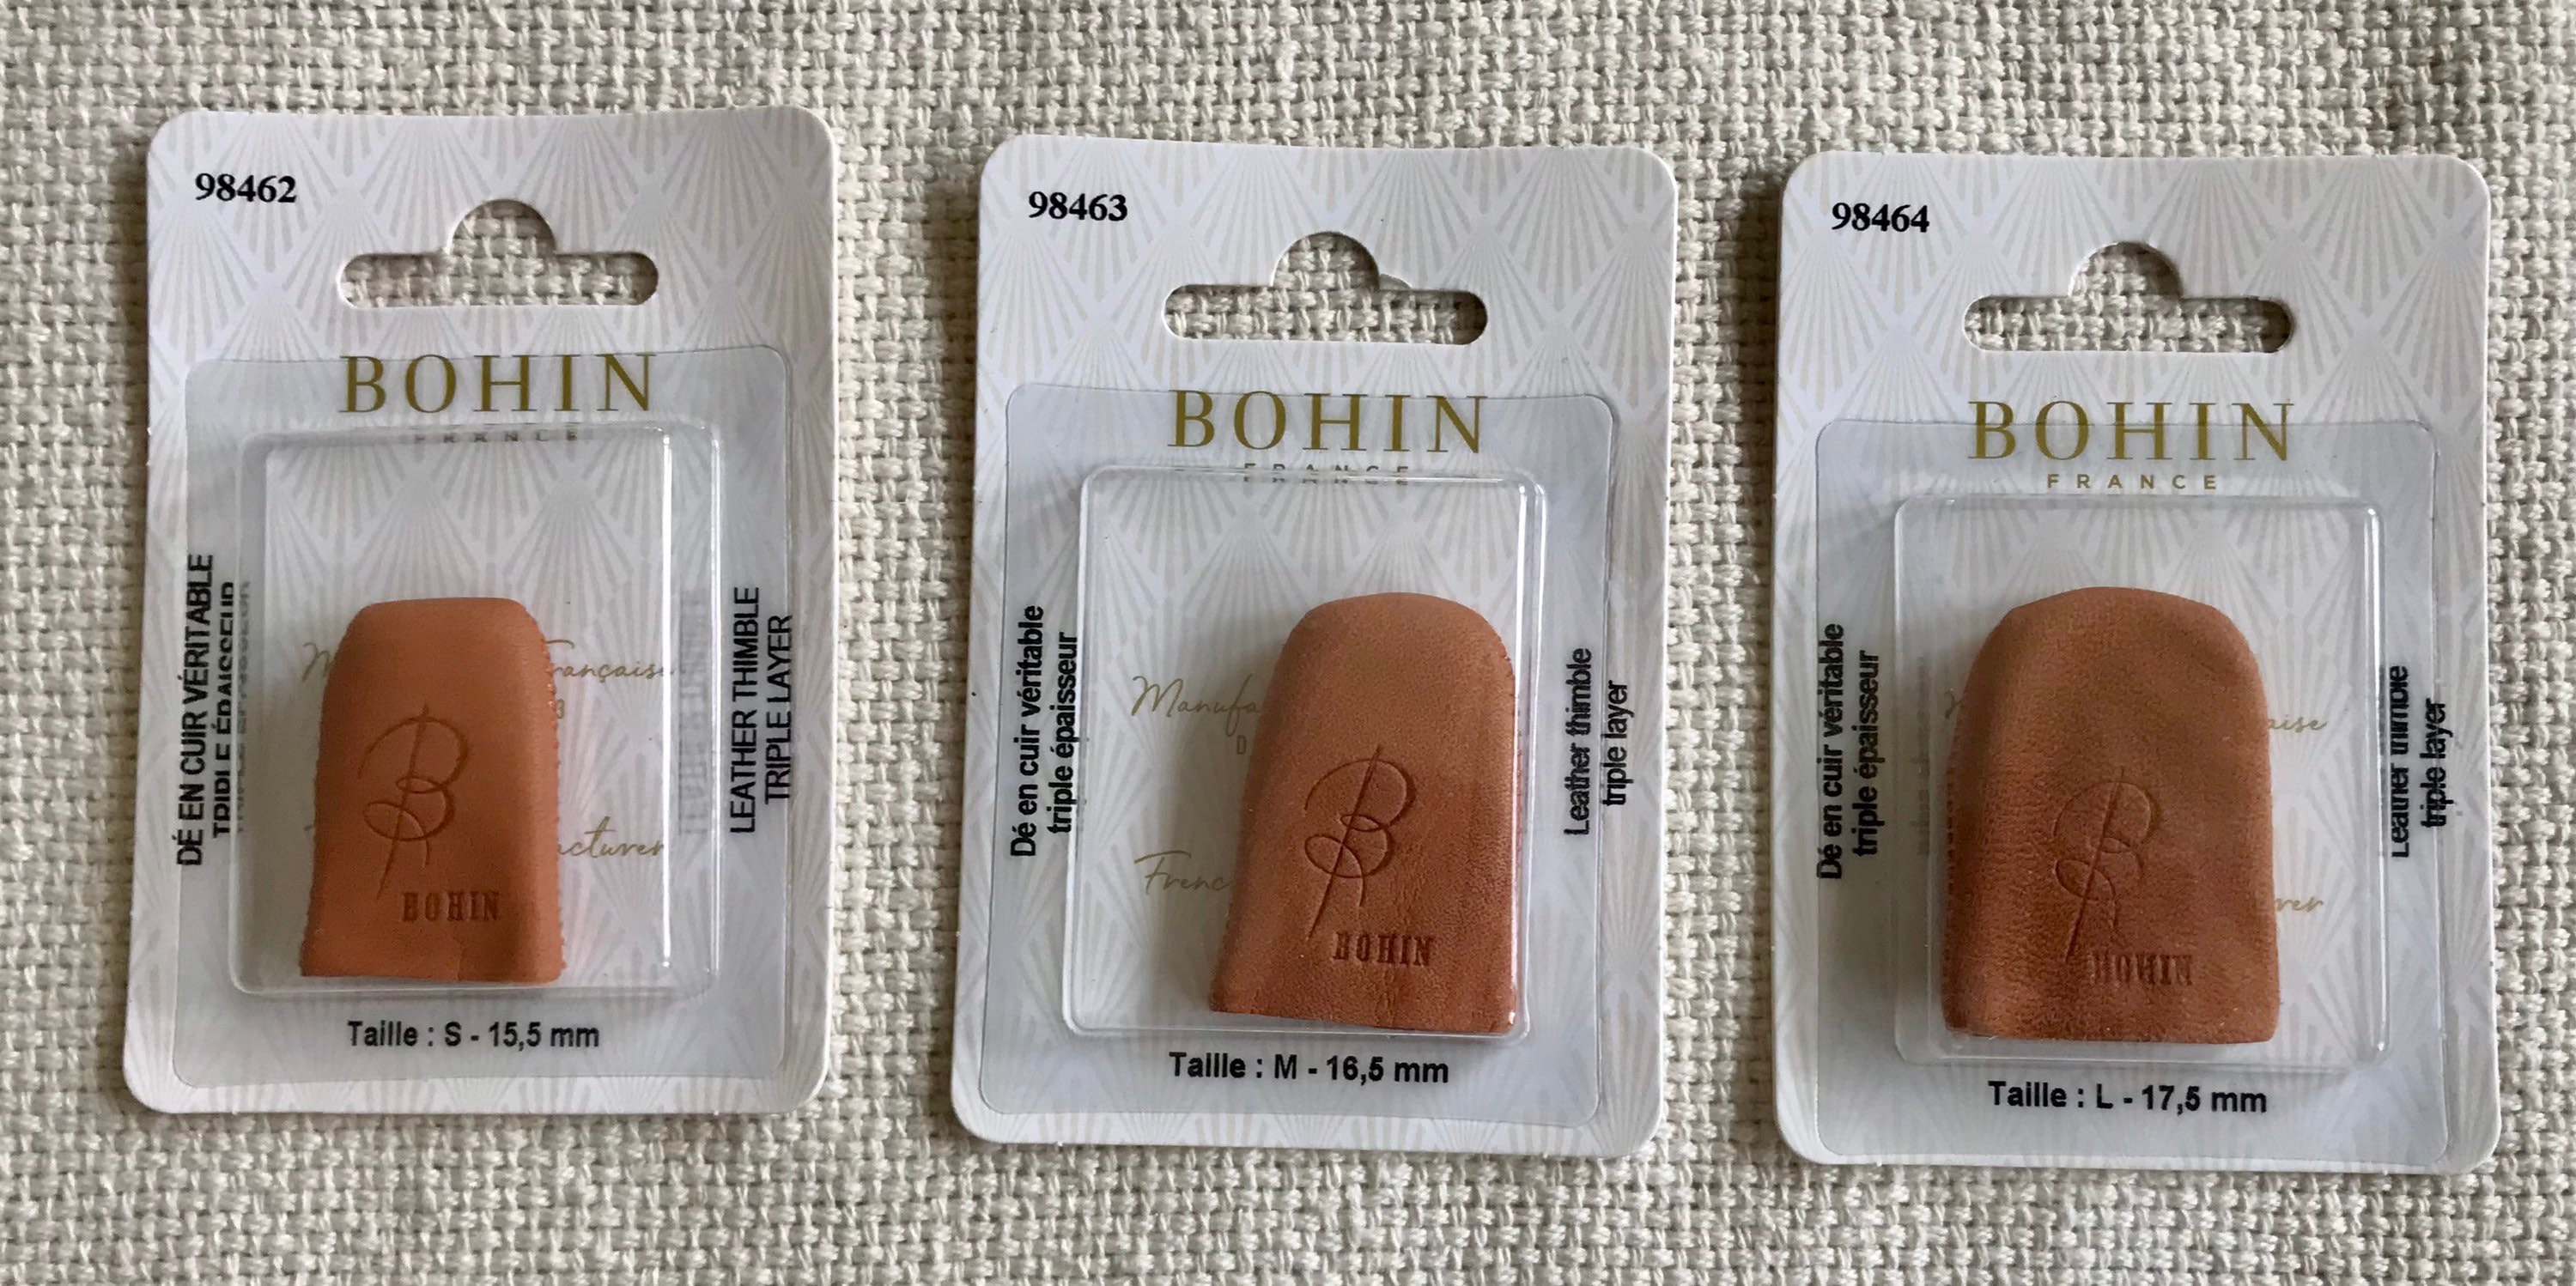 Bohin Leather Triple Layer Large Thimble 98464